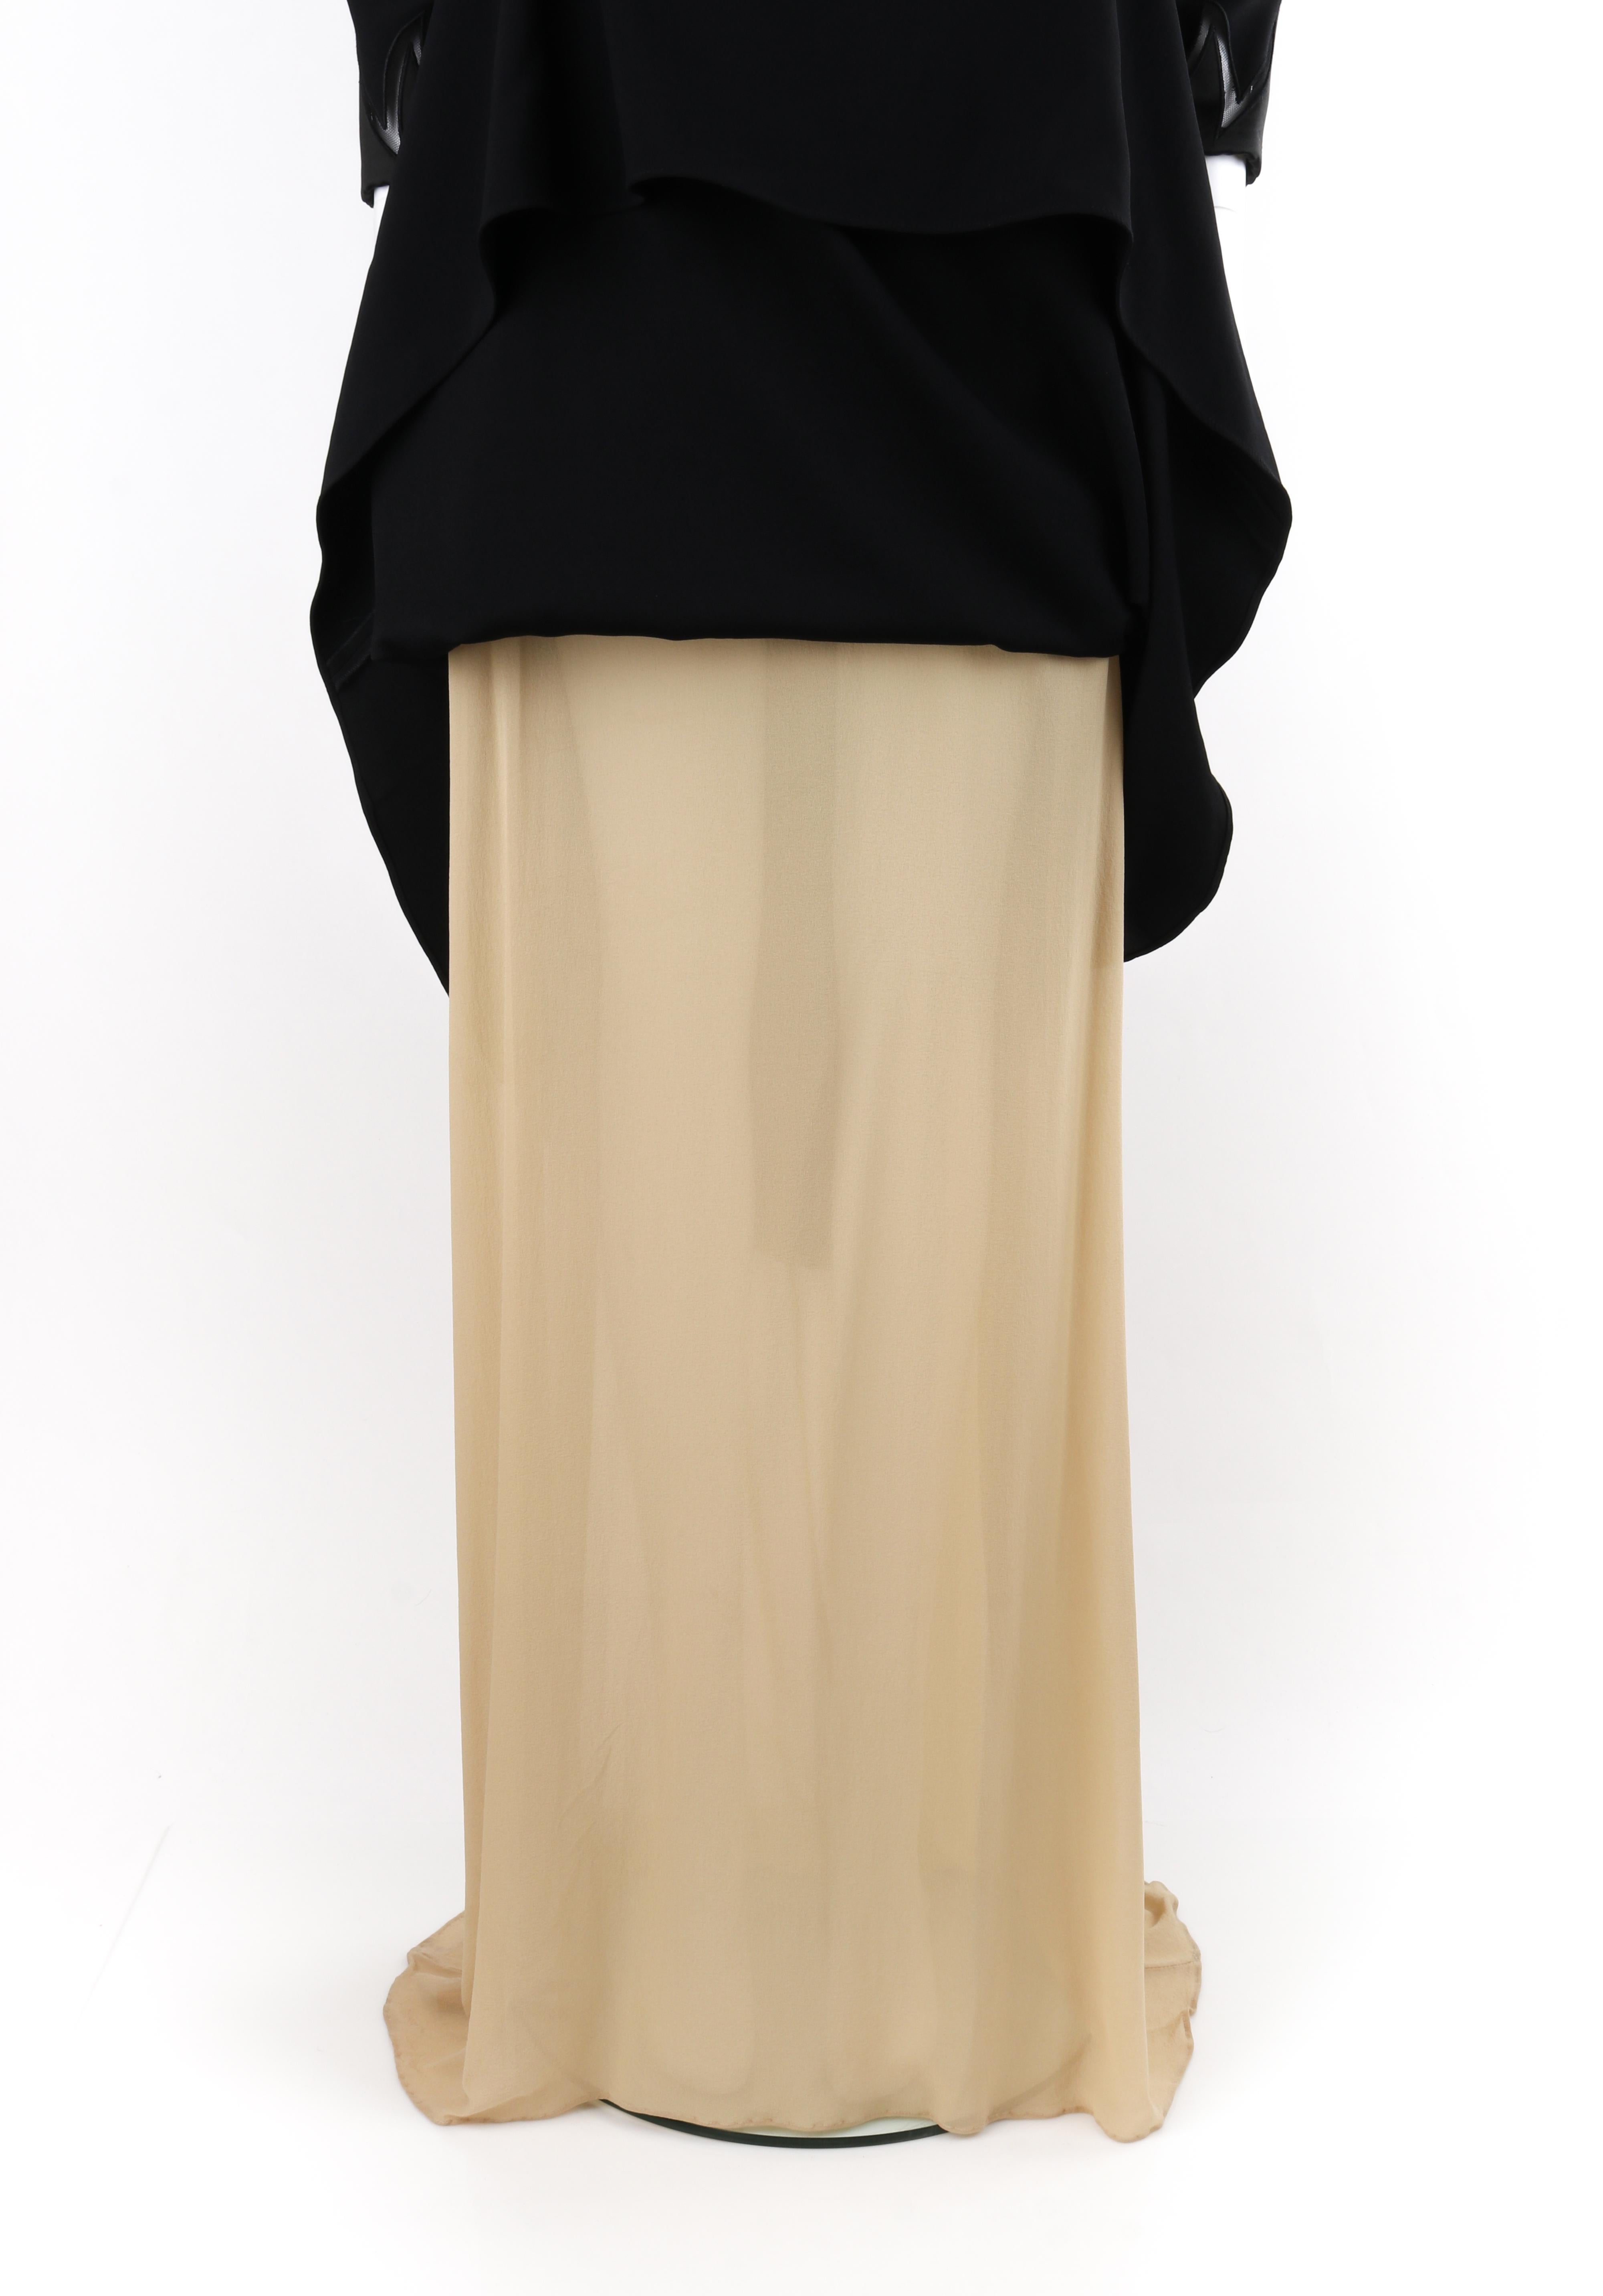 ALEXANDER McQUEEN A/W 2007 Black Sheer Long Sleeve Sweet Heart Dress Gown  For Sale 4